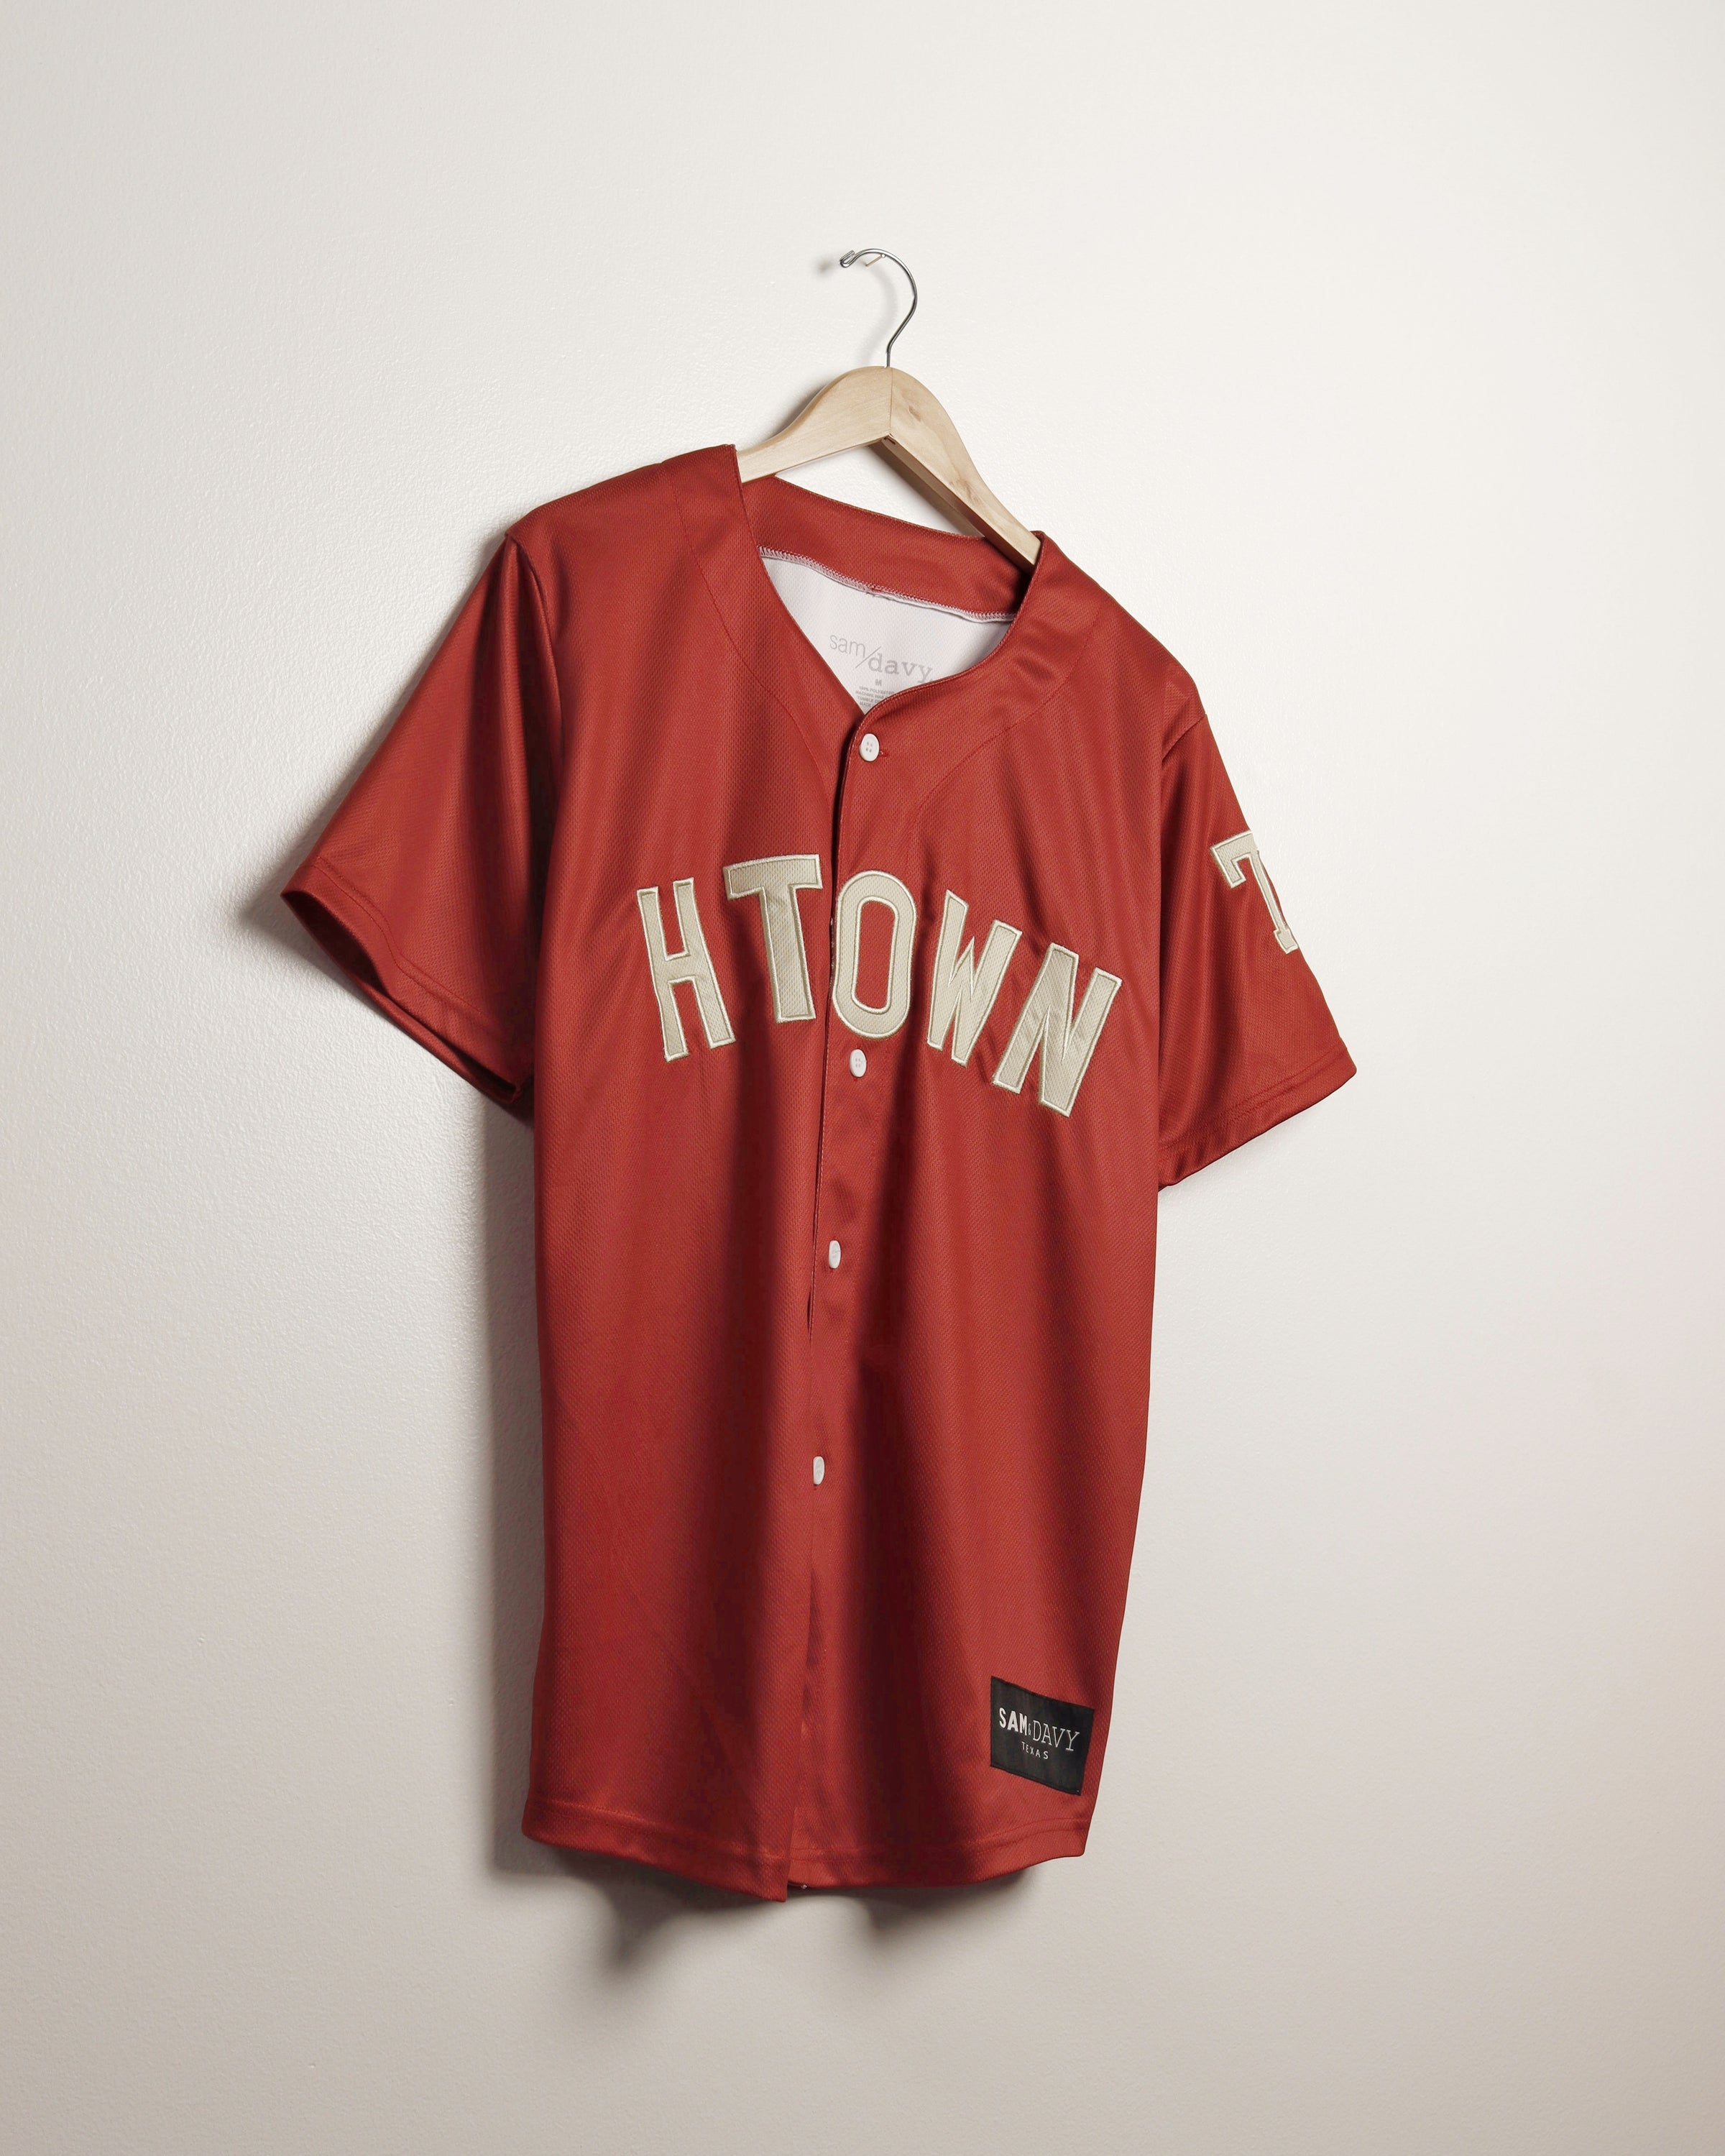 The HTOWN Baseball Jersey (Champagne/Black) – Sam & Davy